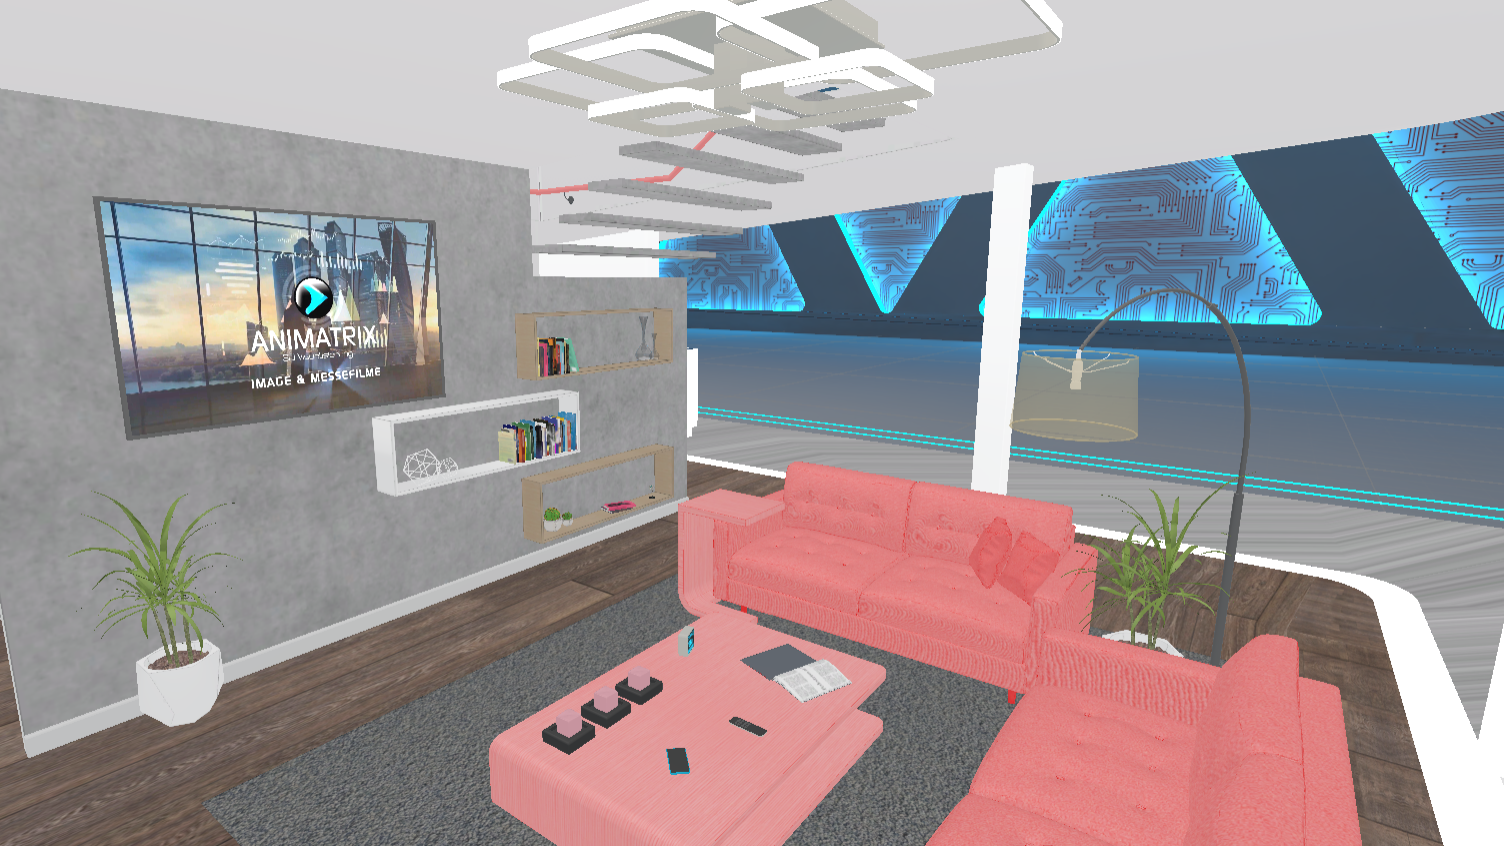 Animatrix Booth Level gameplay screenshot